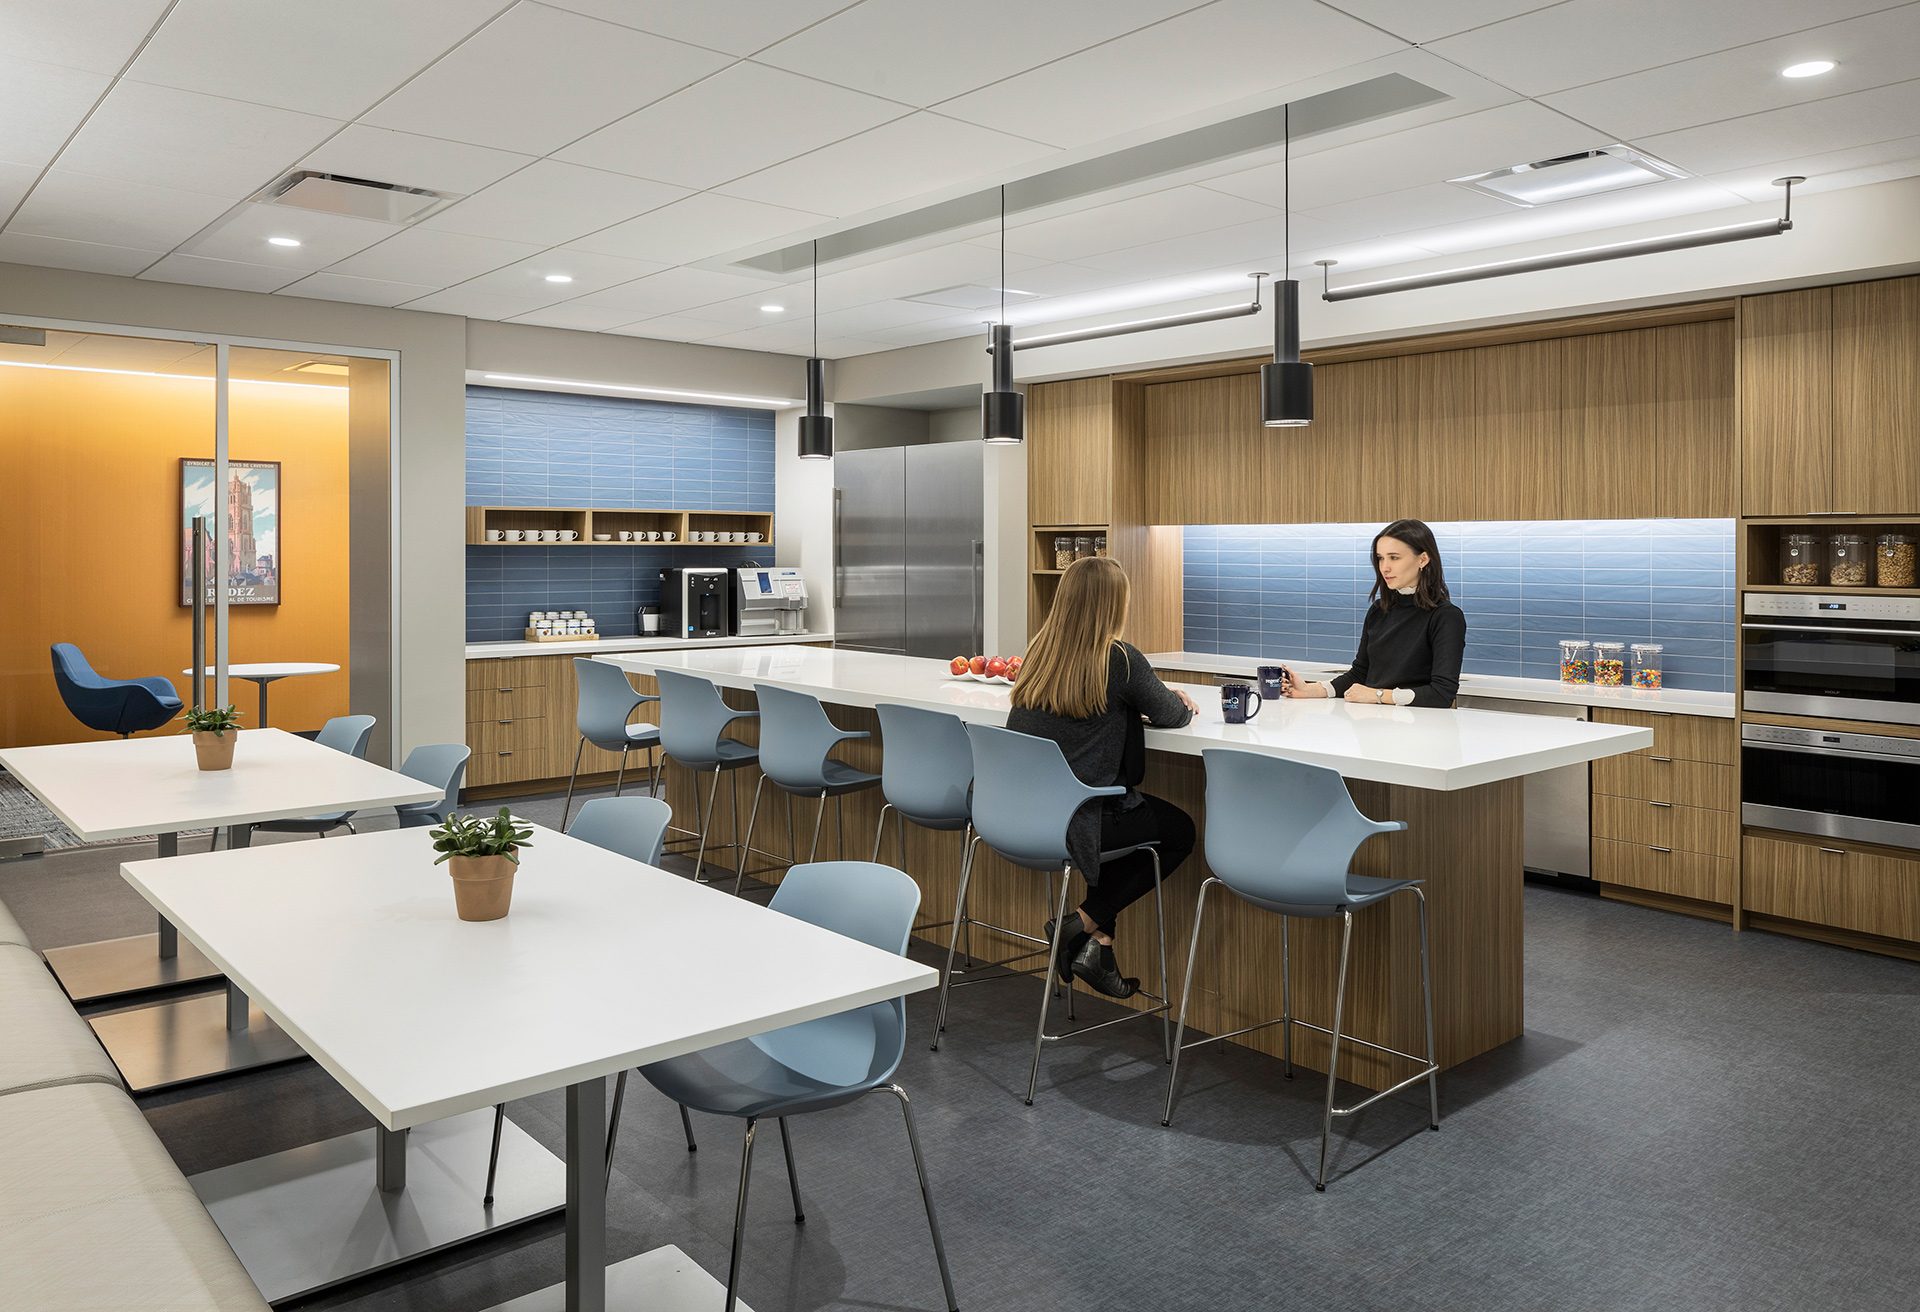 RegentAtlantic workplace design with hospitality elements